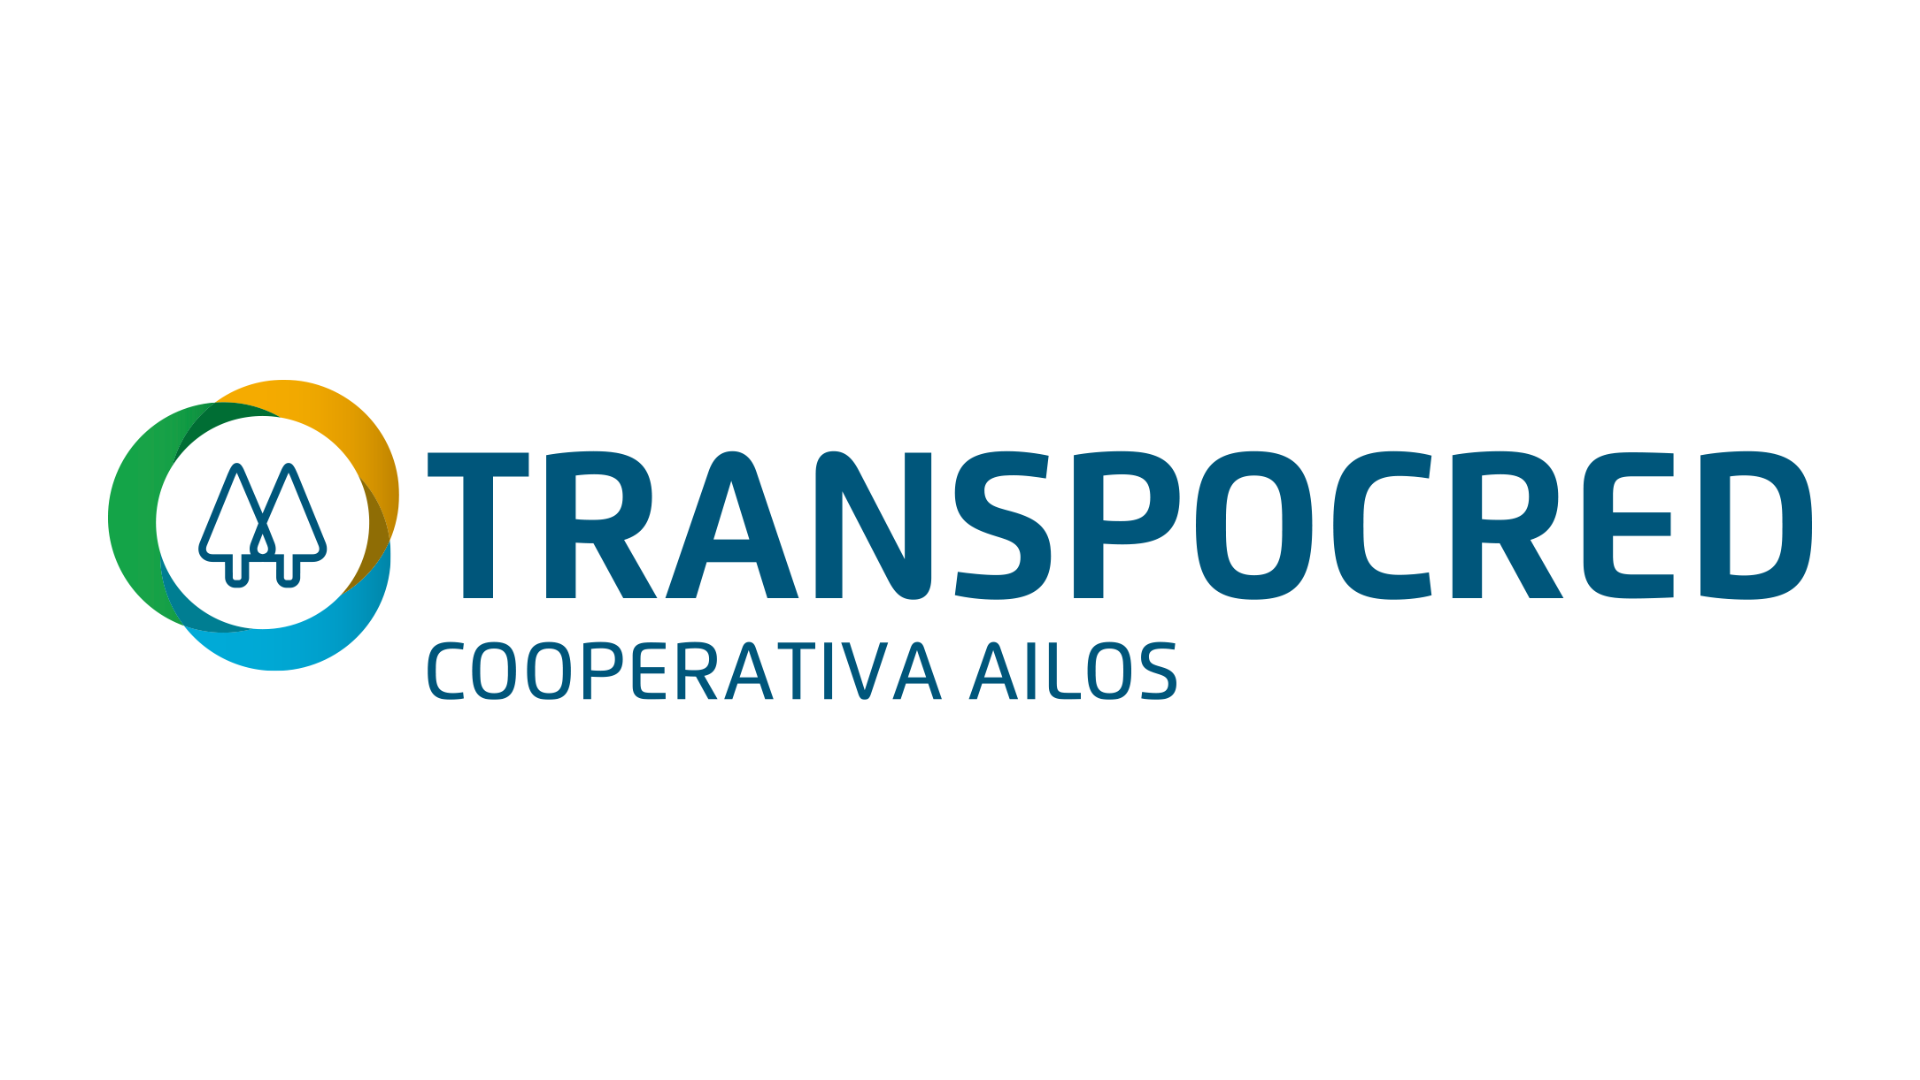 Transpocred Cooperativa Ailos